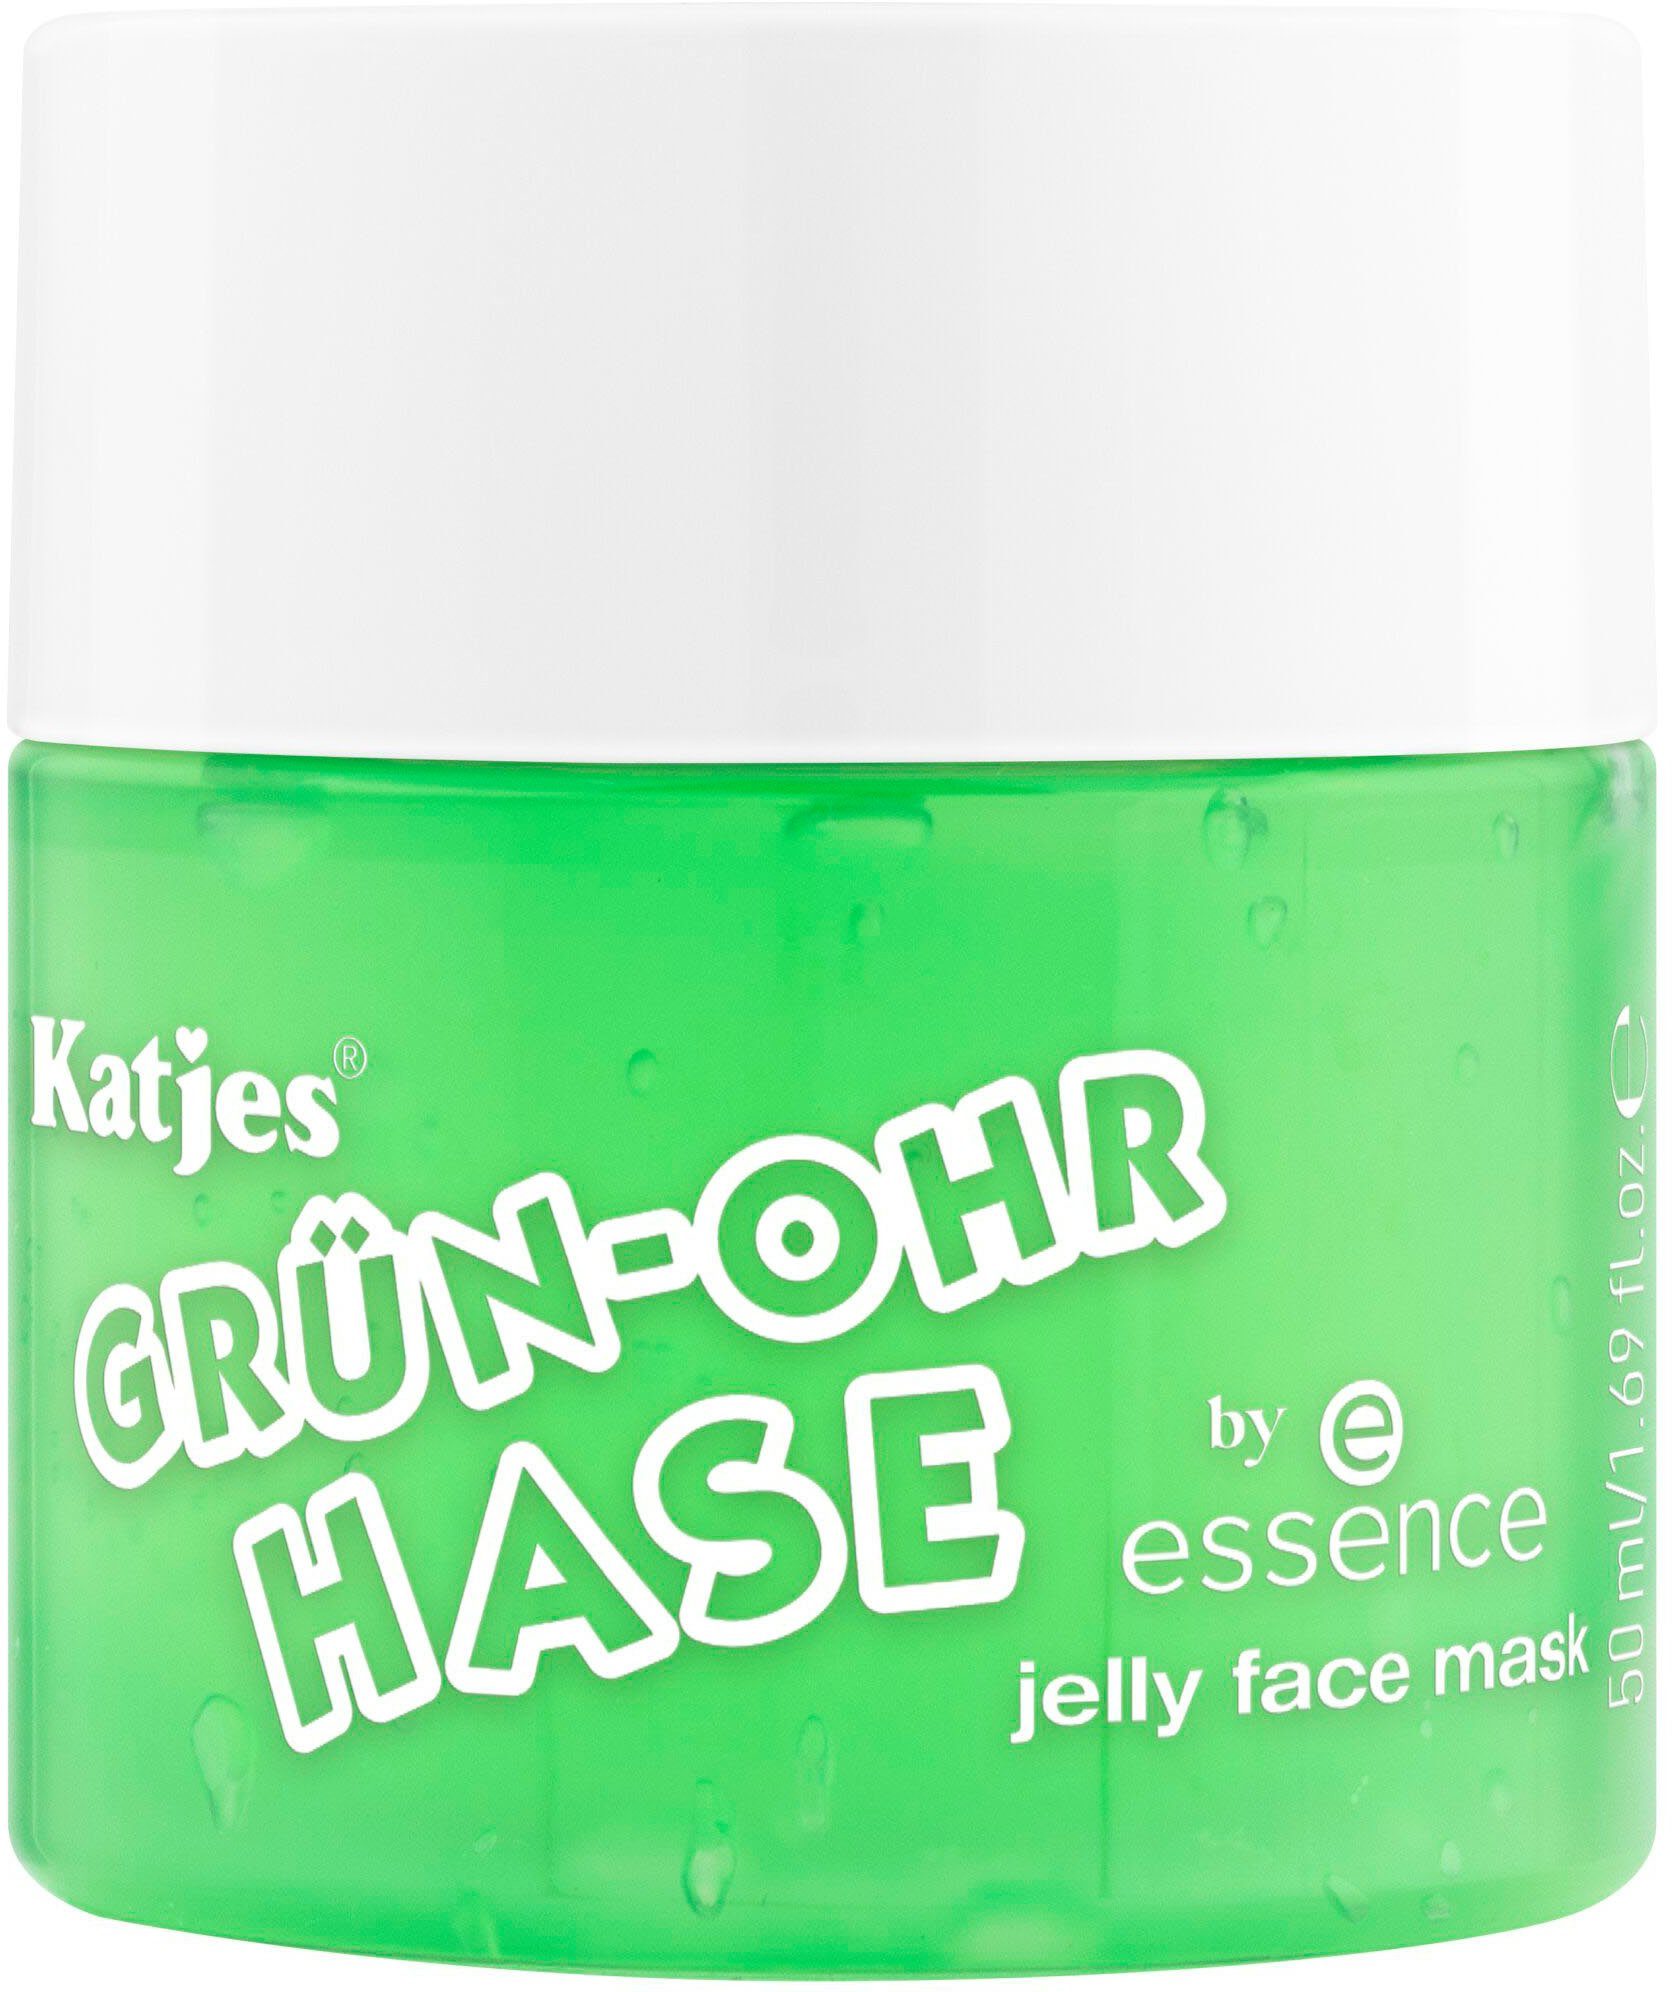 Essence Gesichtsmaske essence jelly face mask Set, 3-tlg.